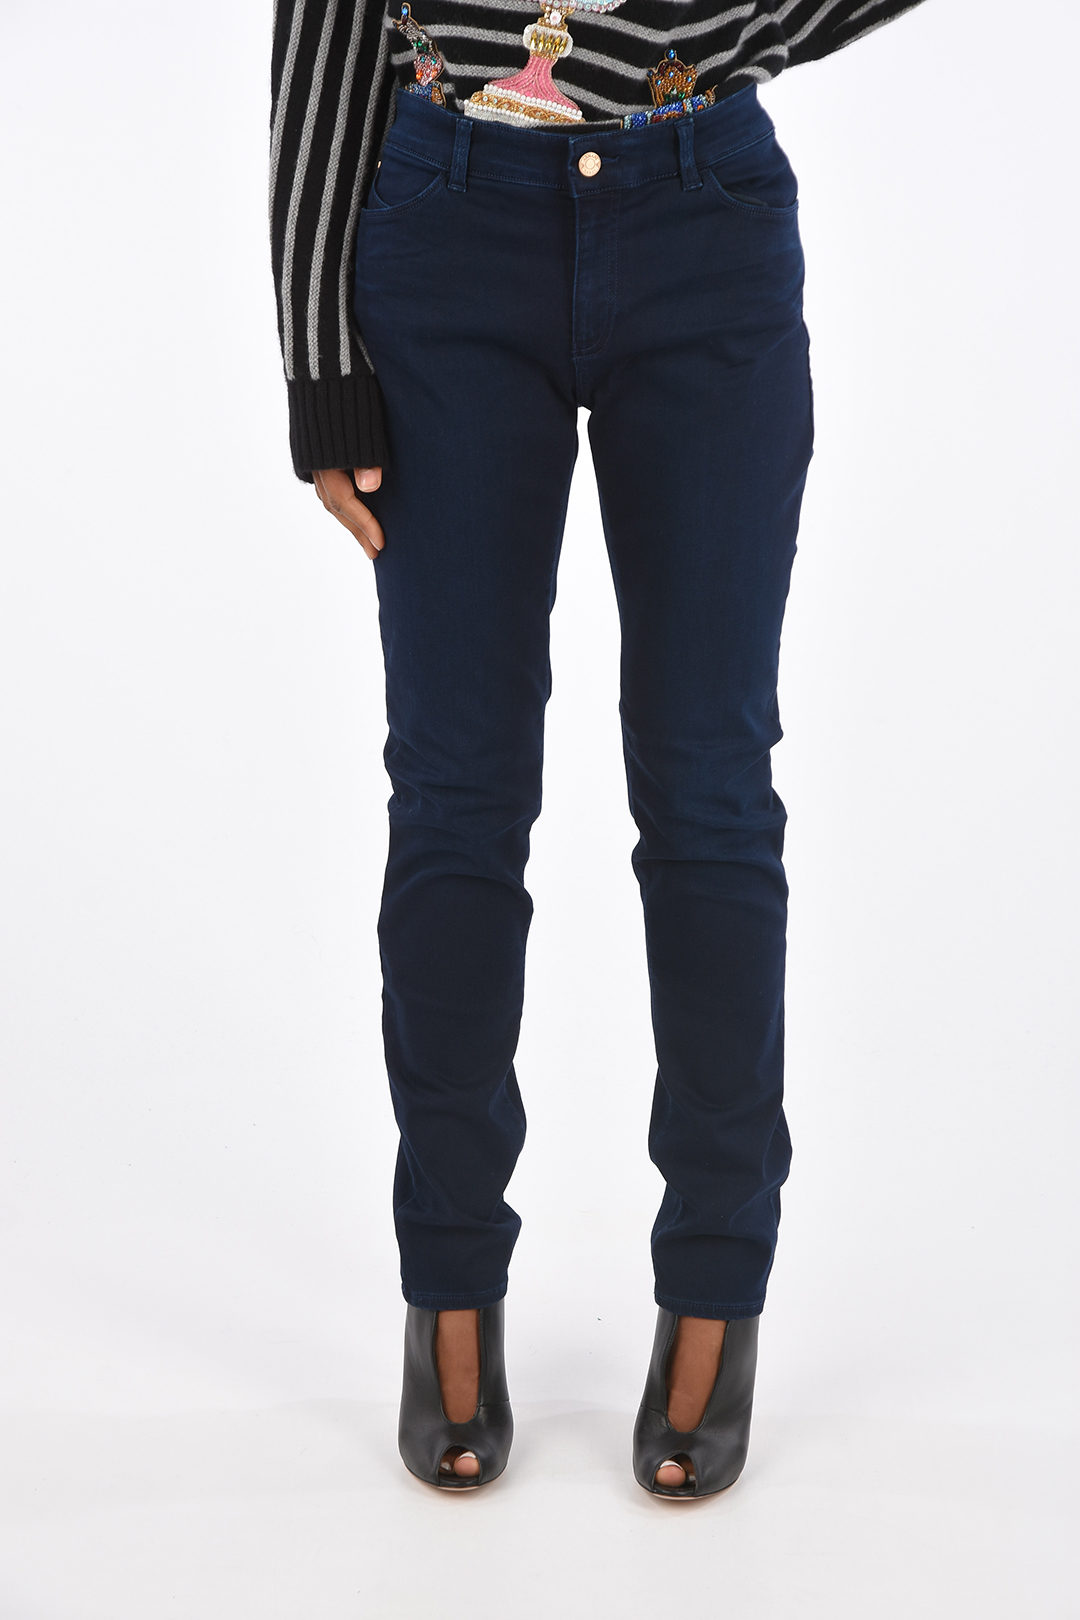 Armani ARMANI Slim J18 Jeans women - Glamood Outlet